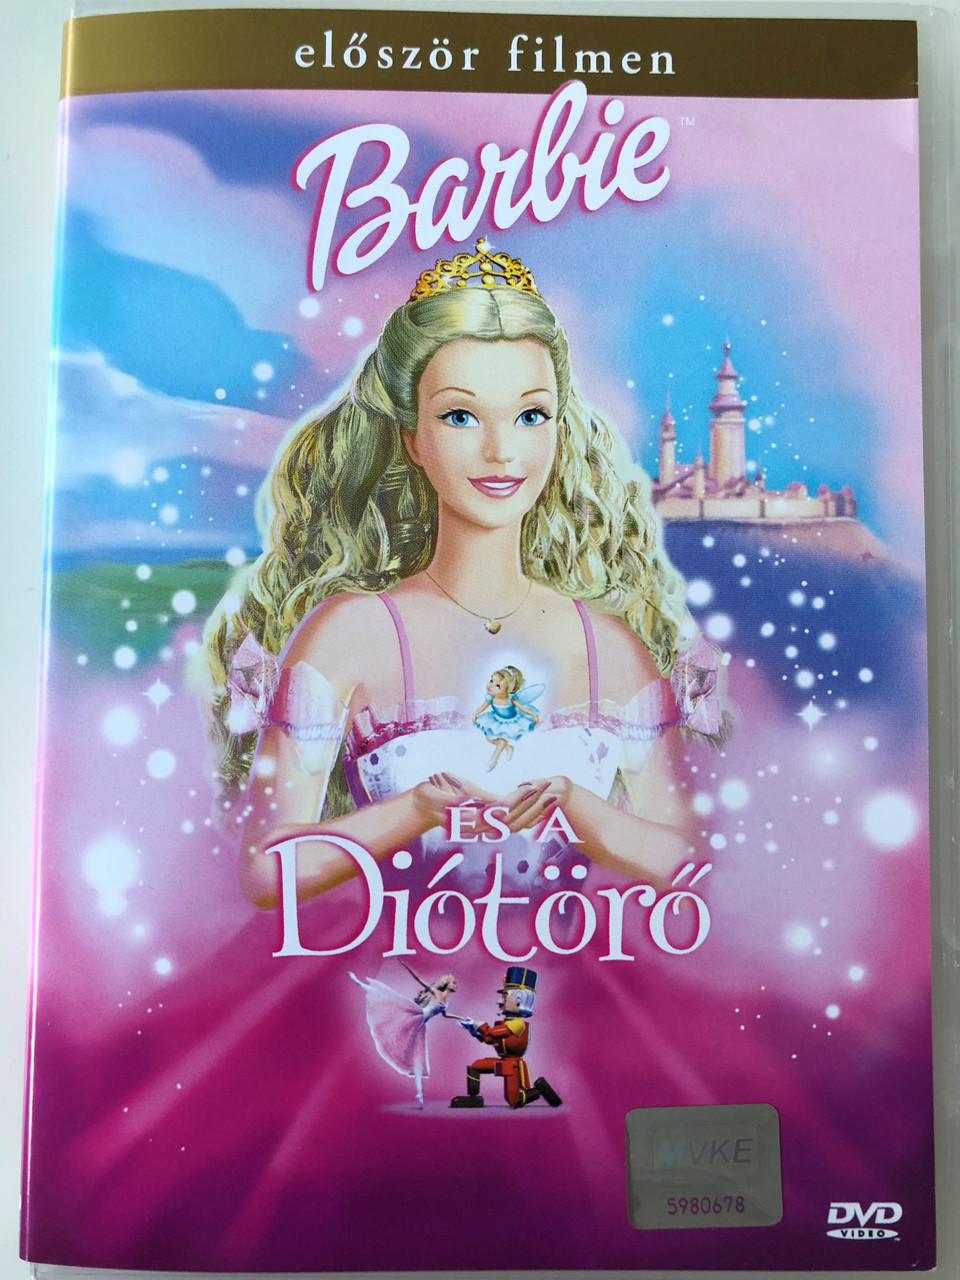 Barbie the Nutcracker DVD 2001 Barbie és a diótörő / Directed by Owen Hurley / Kelly Sheridan, Curry, Morrow, Chantal Strand - bibleinmylanguage